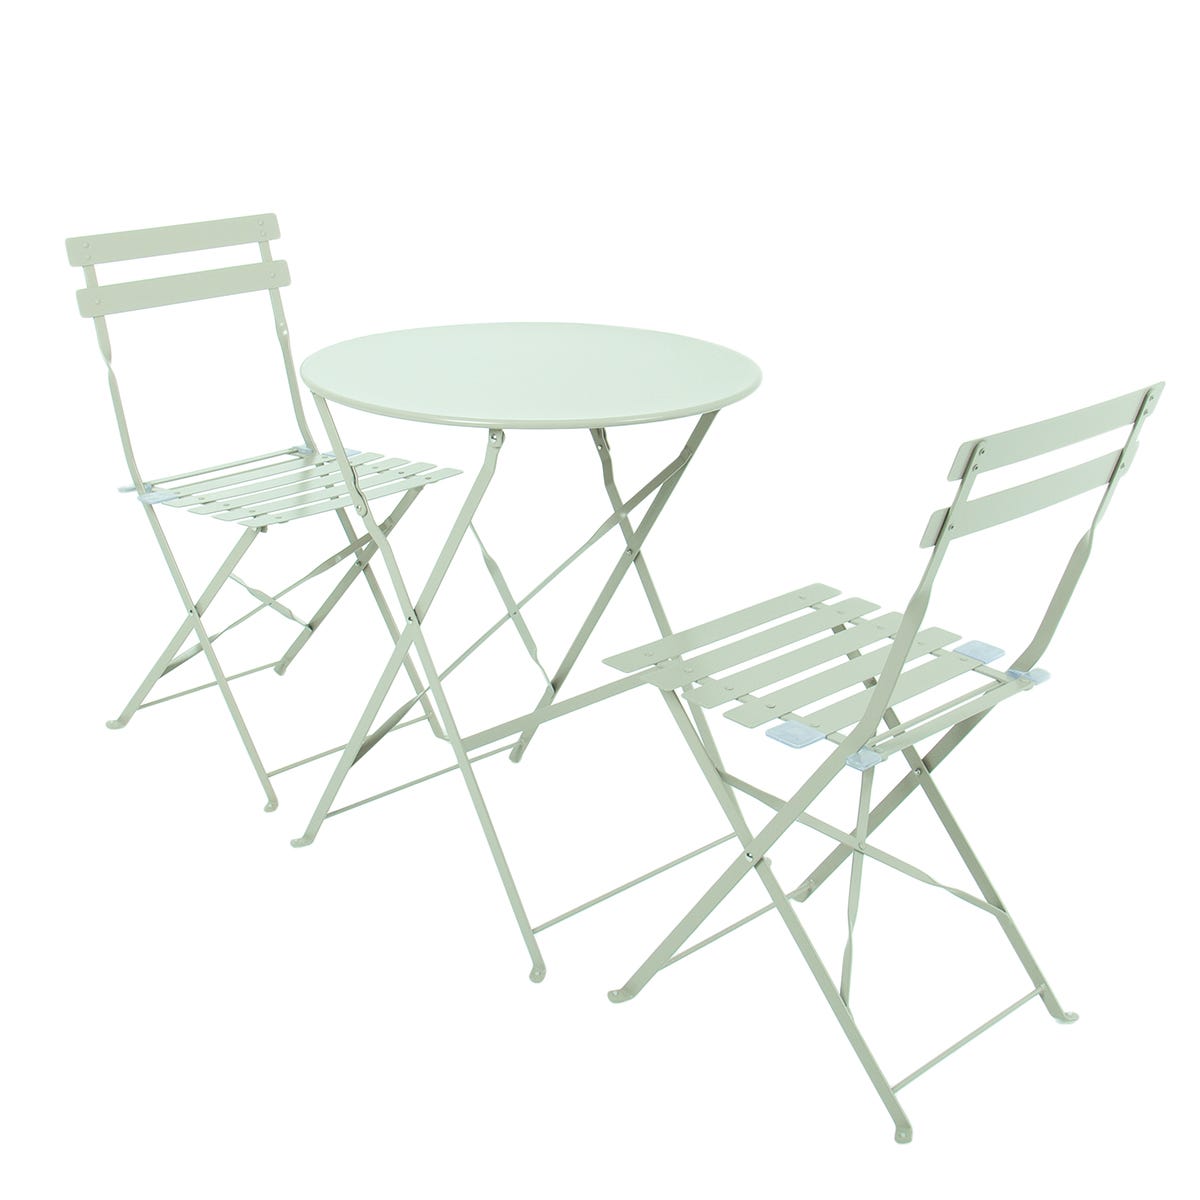 Charles Bentley 3 Piece Metal Bistro Set Garden Patio Table 2 Chairs 6 Colours Green